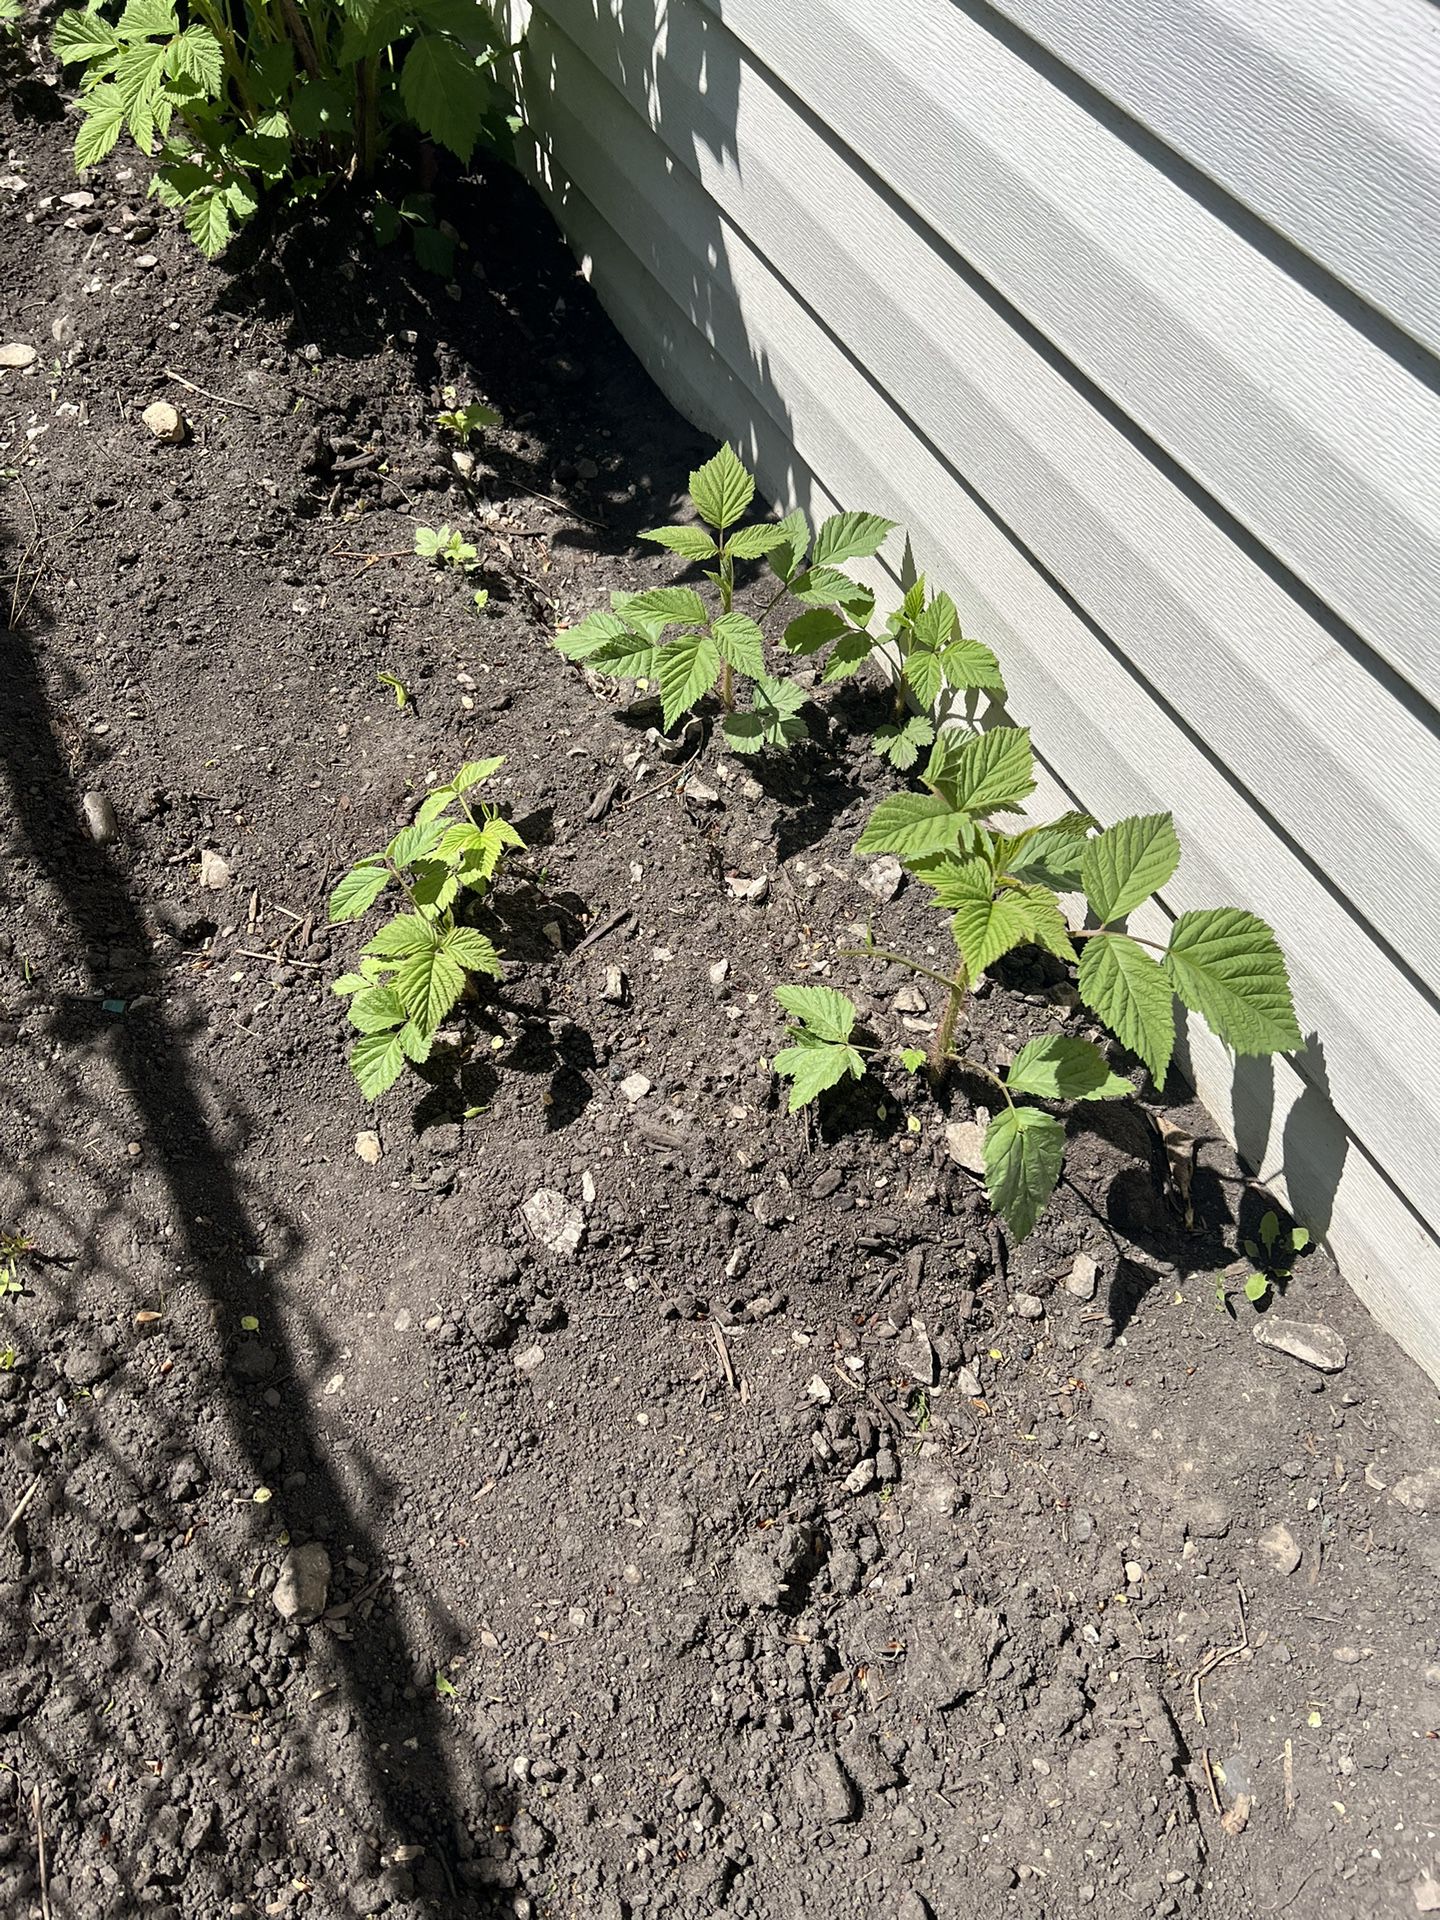 Raspberry or Blackberry Plants Seeding